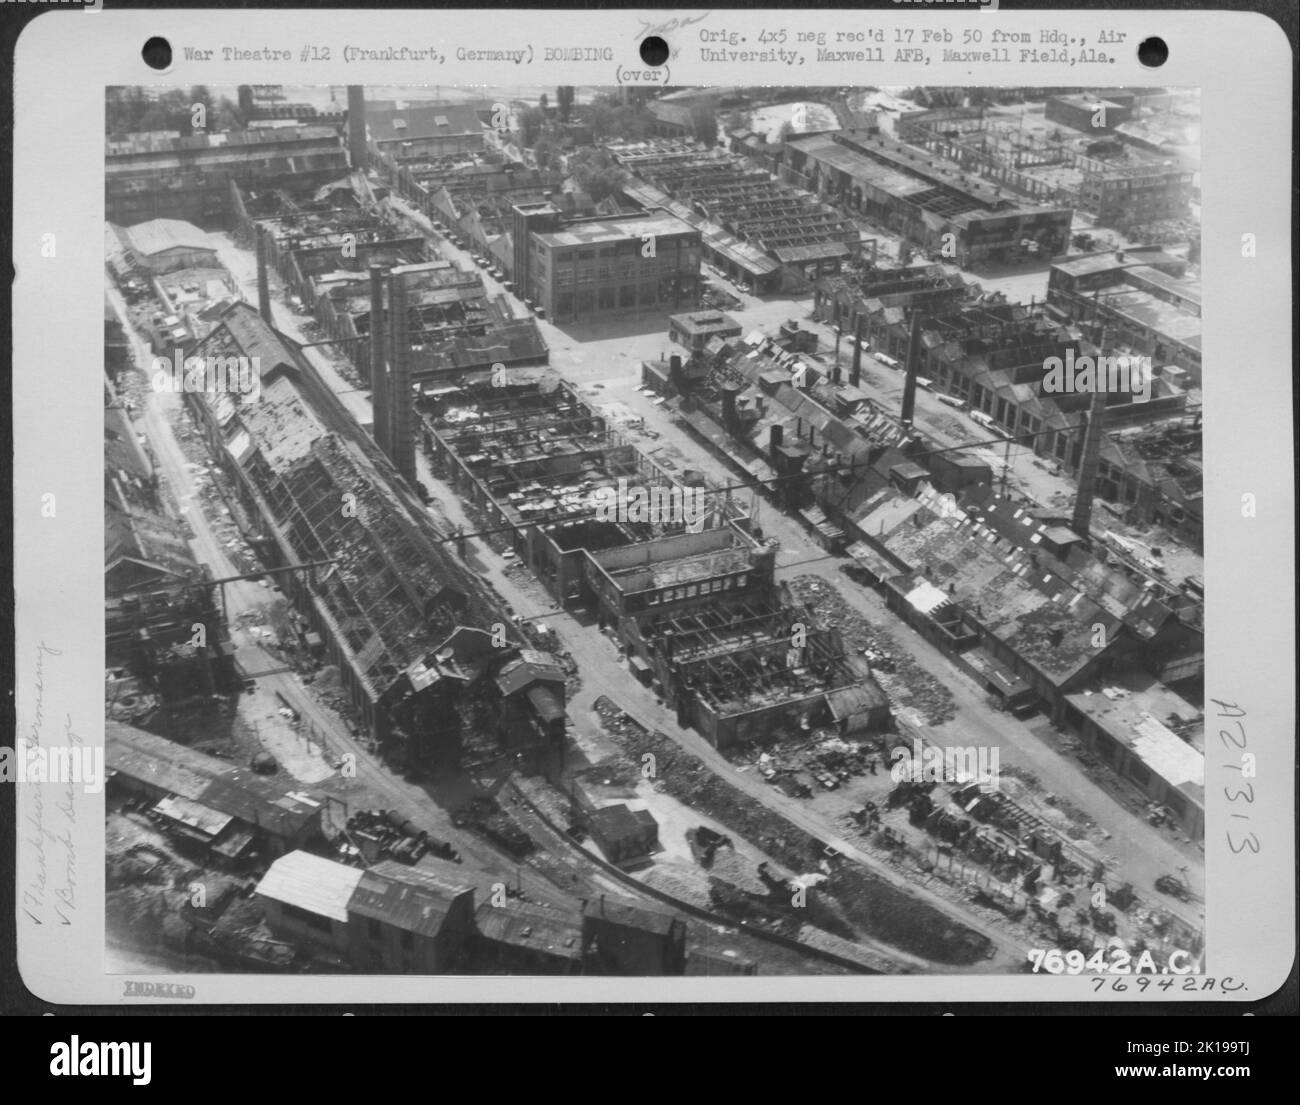 Aerial View Of The Vereinigte-Deutsche Metall-Werke Plant At Frankfurt, Germany, Showing Damage Done By Allied Air Attacks. Stock Photo